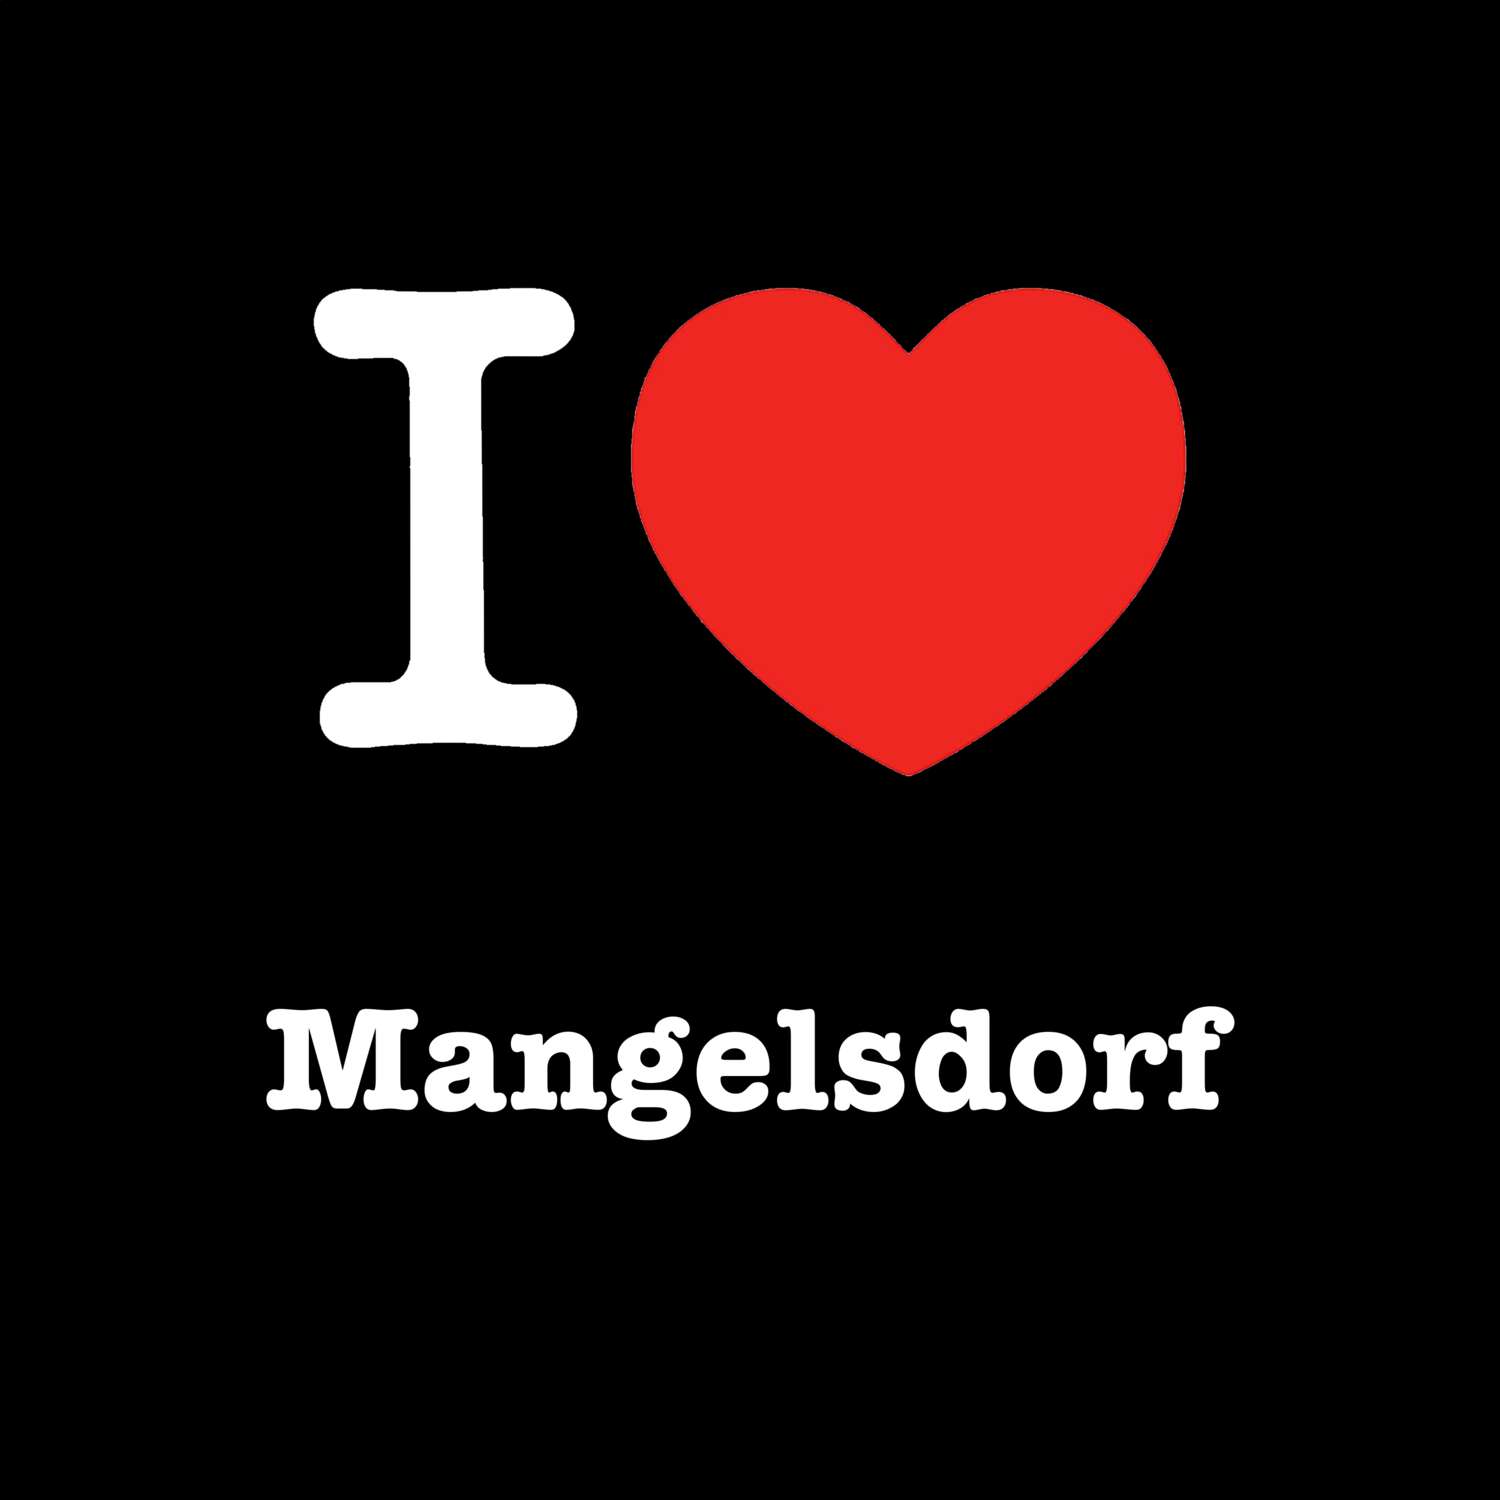 Mangelsdorf T-Shirt »I love«